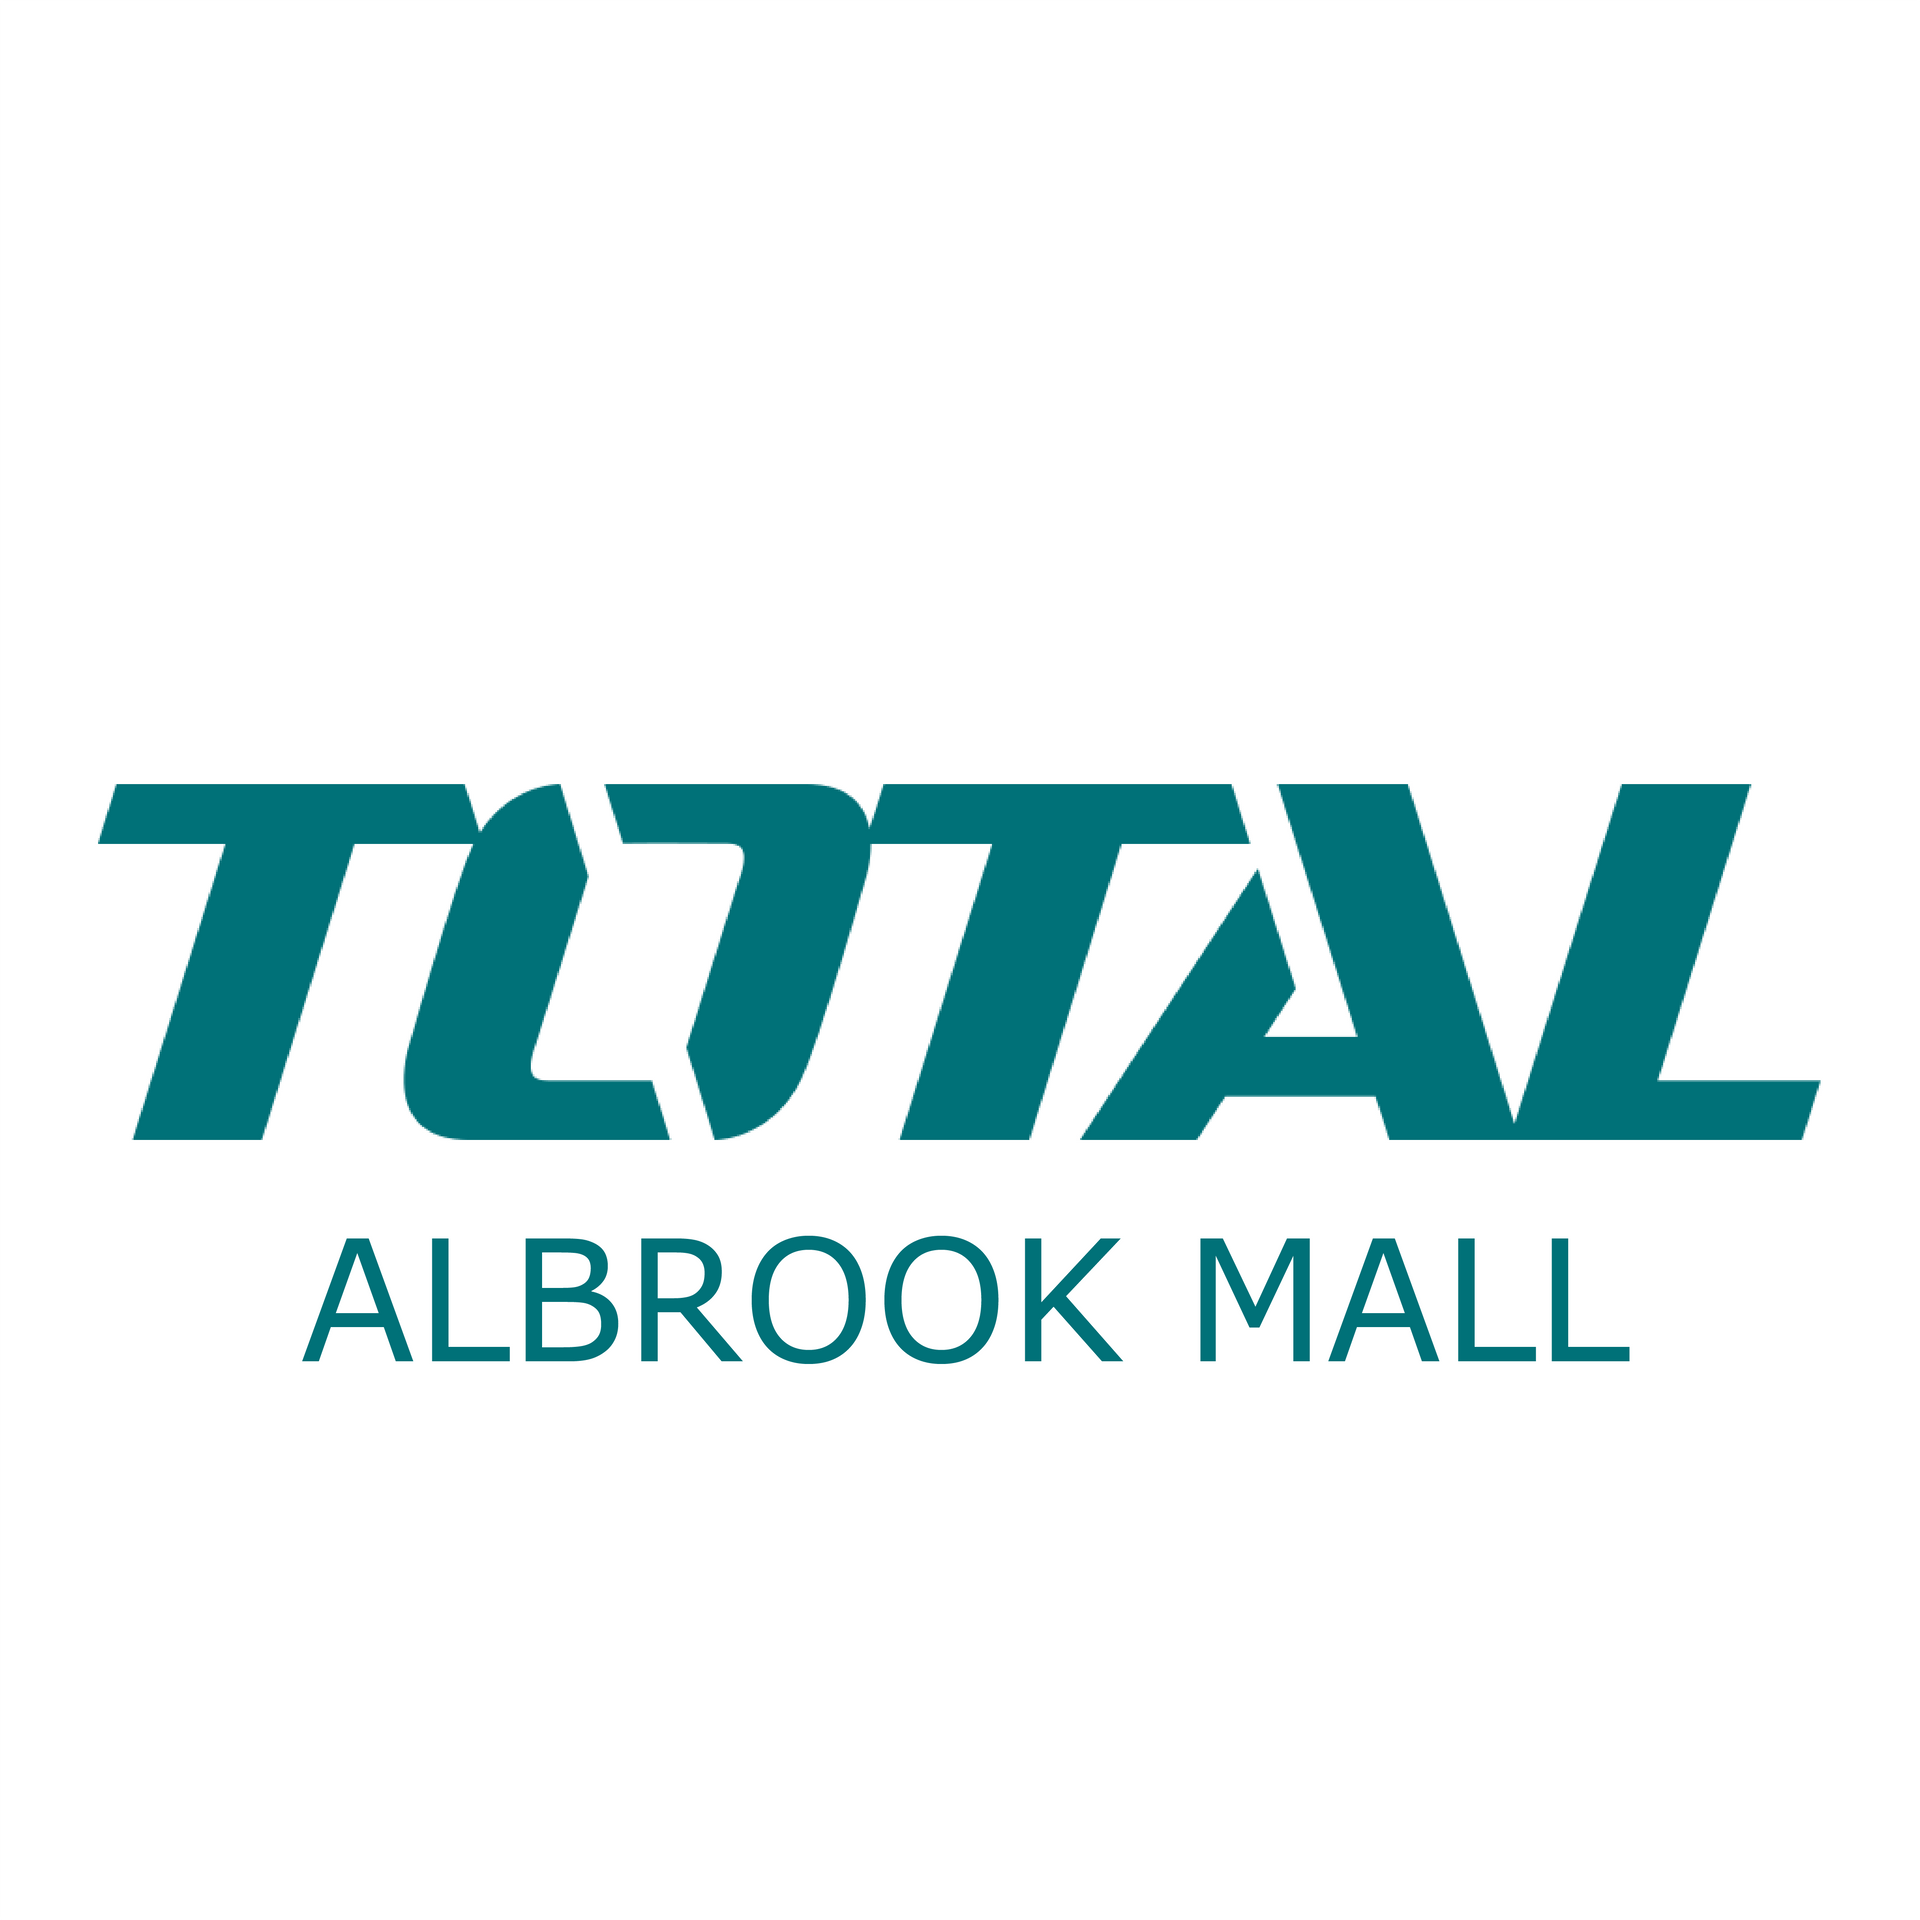 Cargar video: Tienda TOTAL Albrook Mall Local A14 Entrada del León